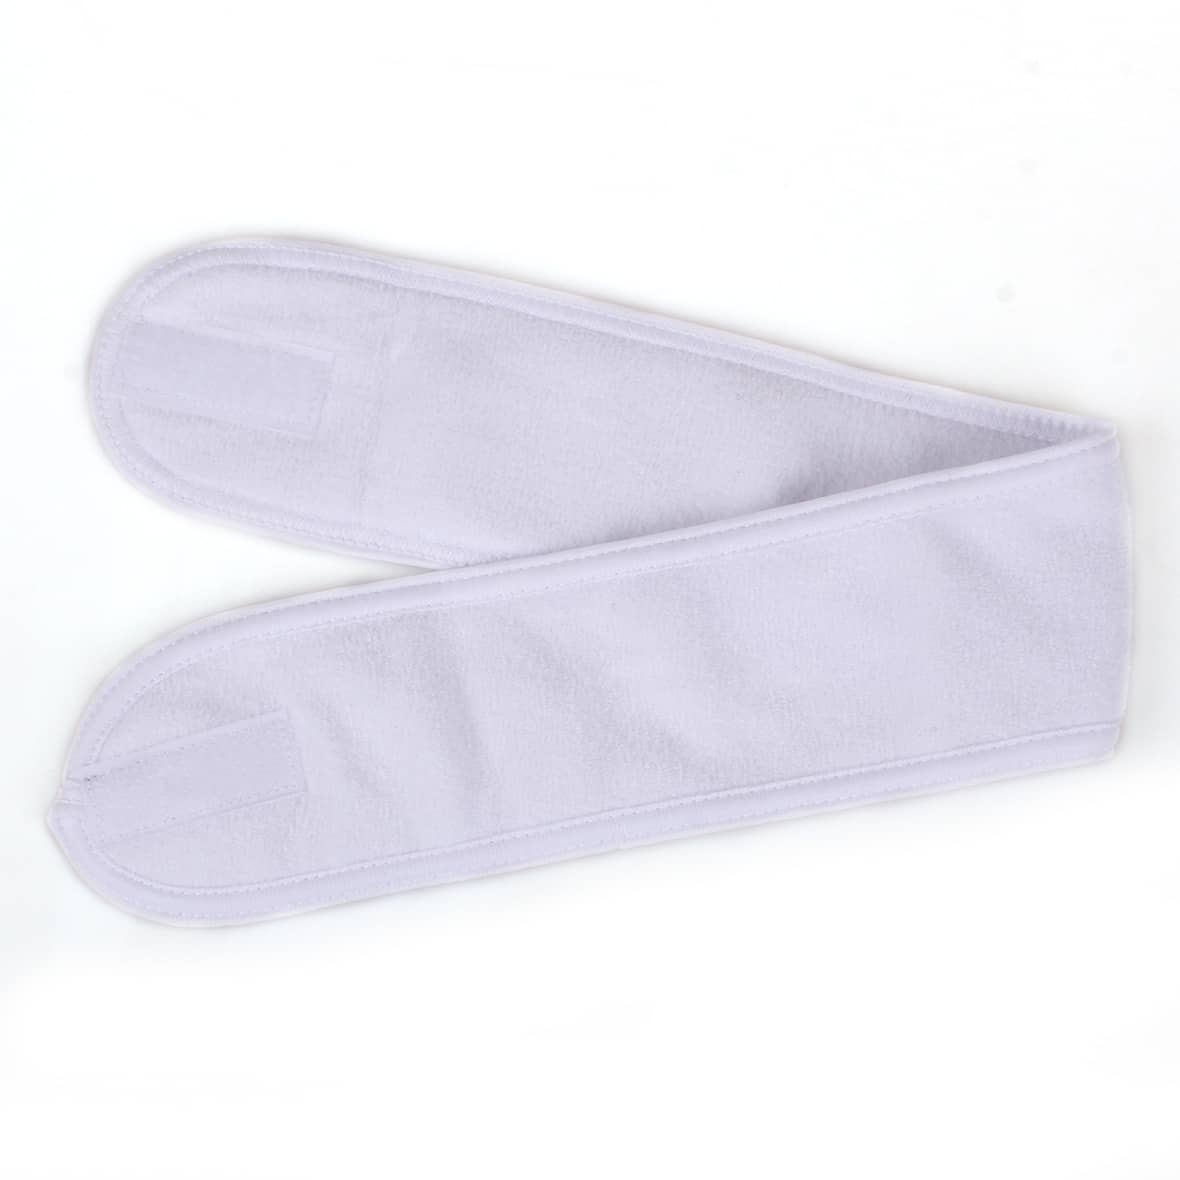 Xtrend 4 PCS Facial Headband Makeup Wrap Terry Cloth Headband Adjustable Towel for Face Washing Shower